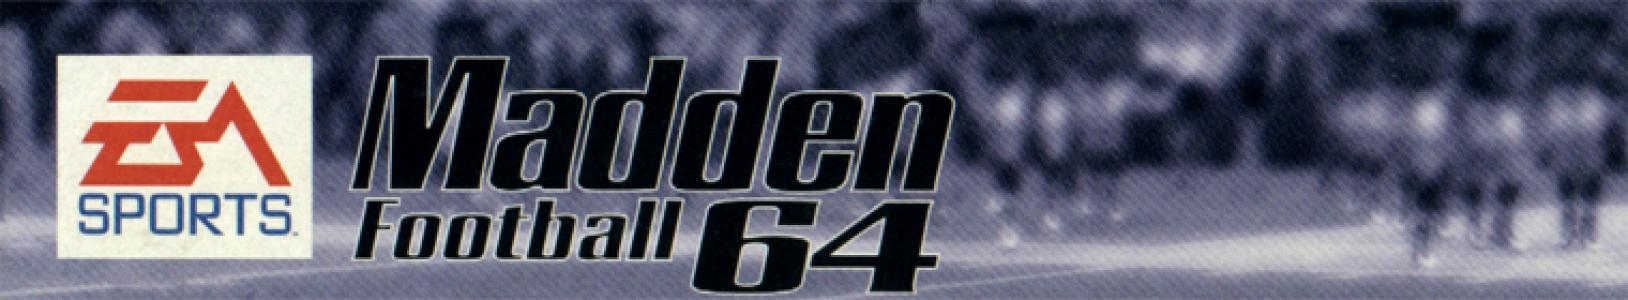 Madden Football 64 banner